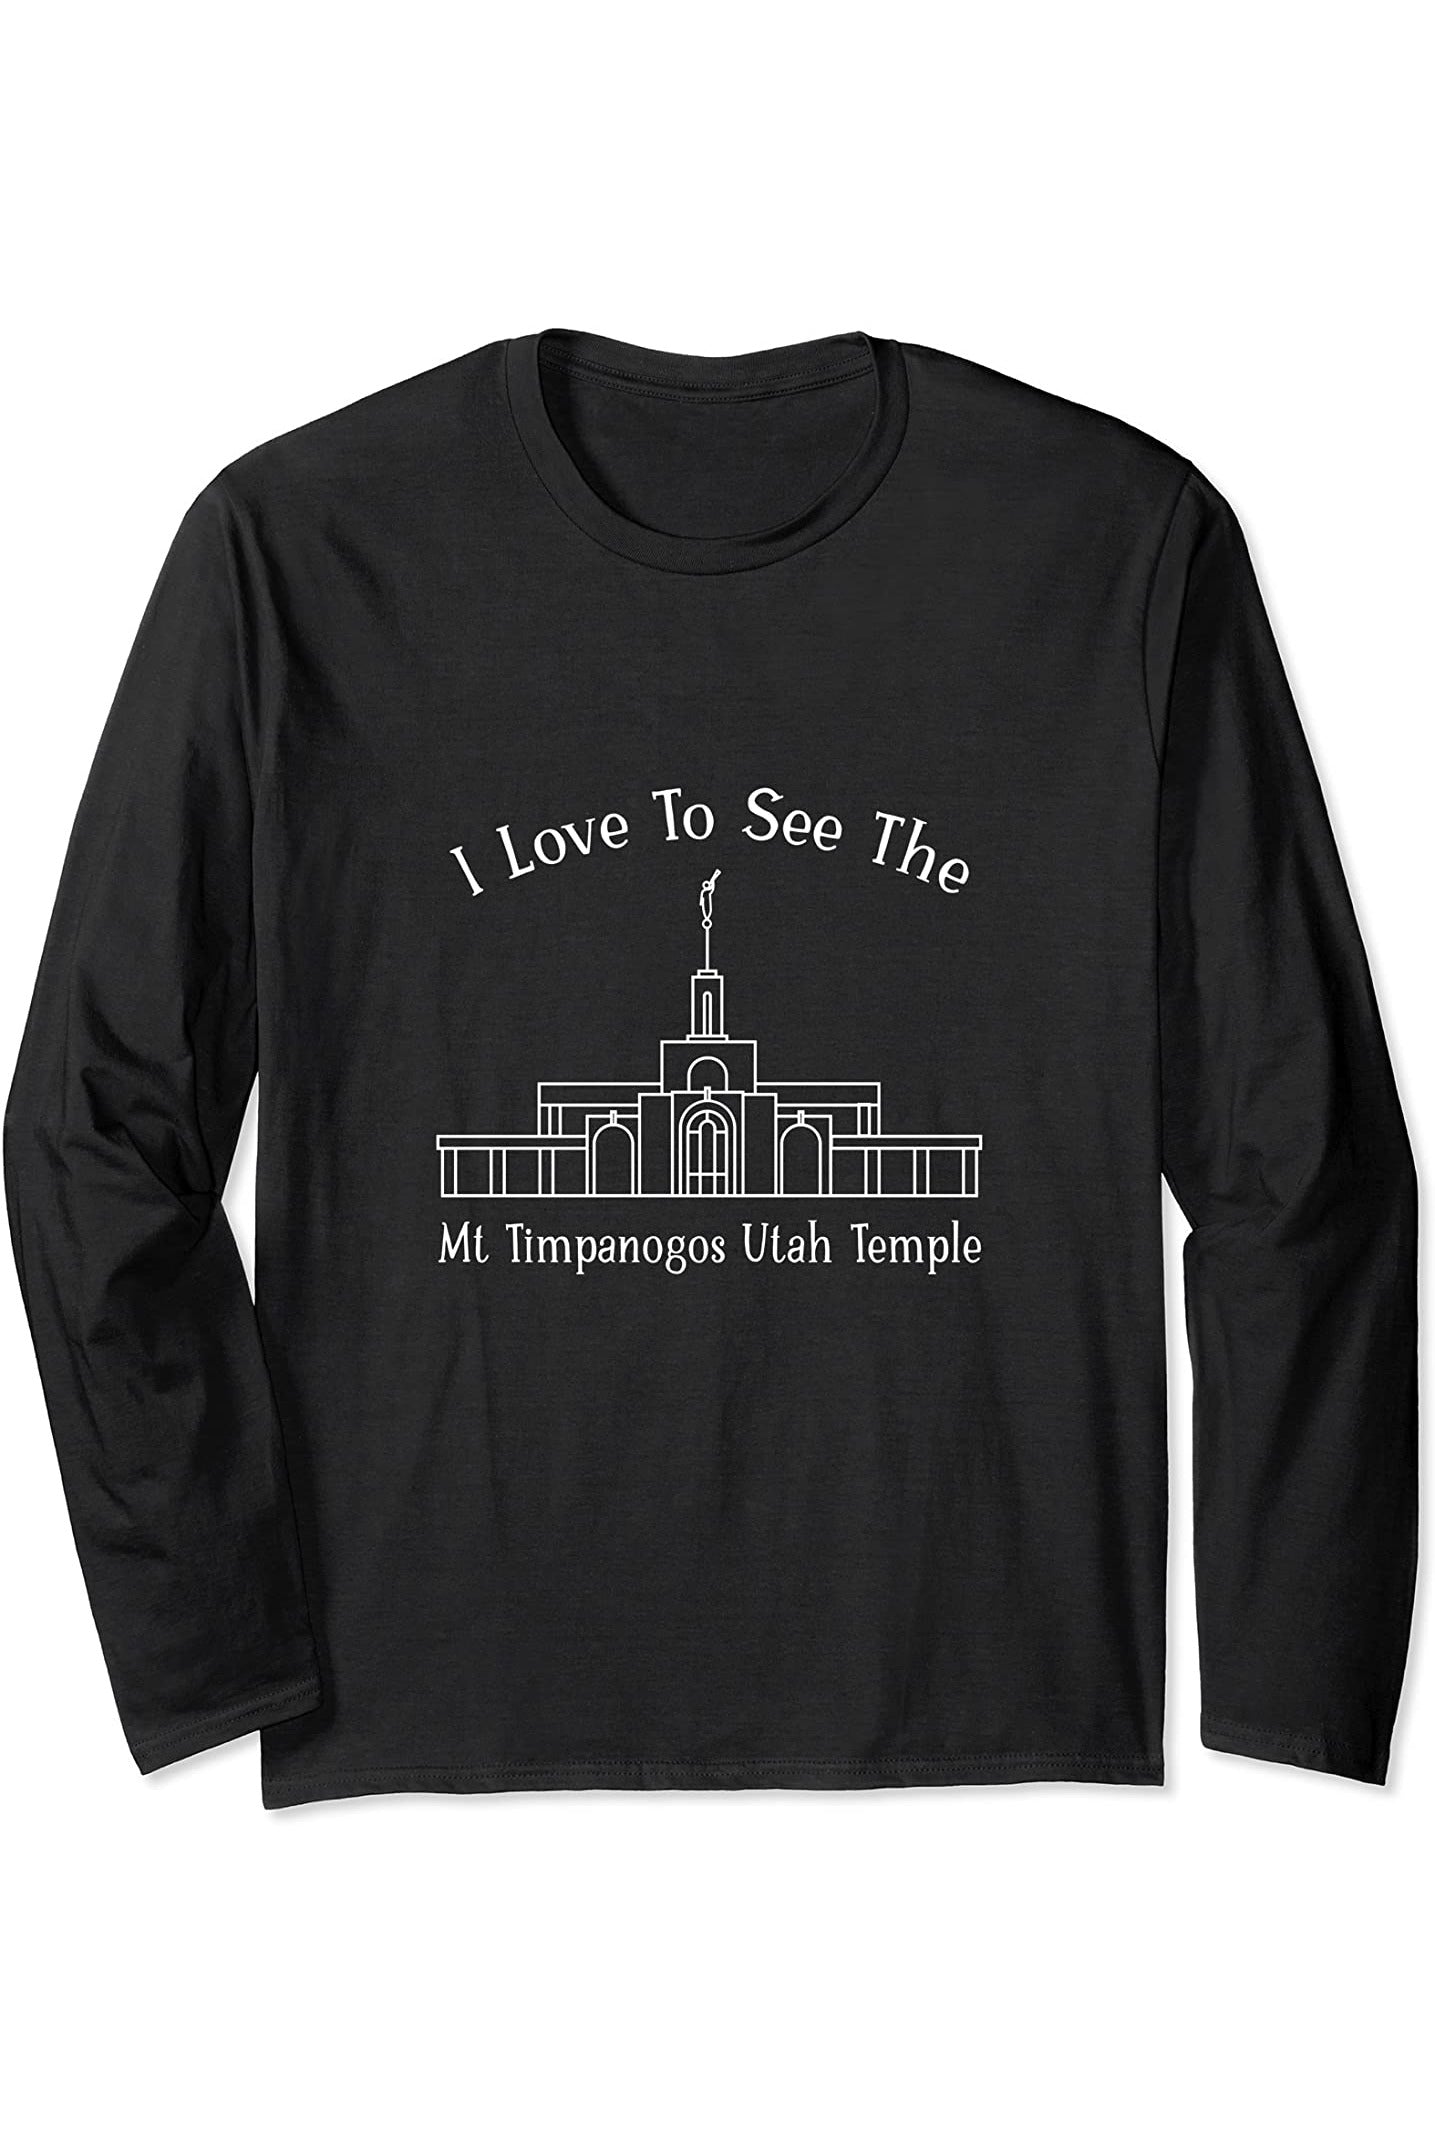 Mt Timpanogos Utah Temple Long Sleeve T-Shirt - Happy Style (English) US